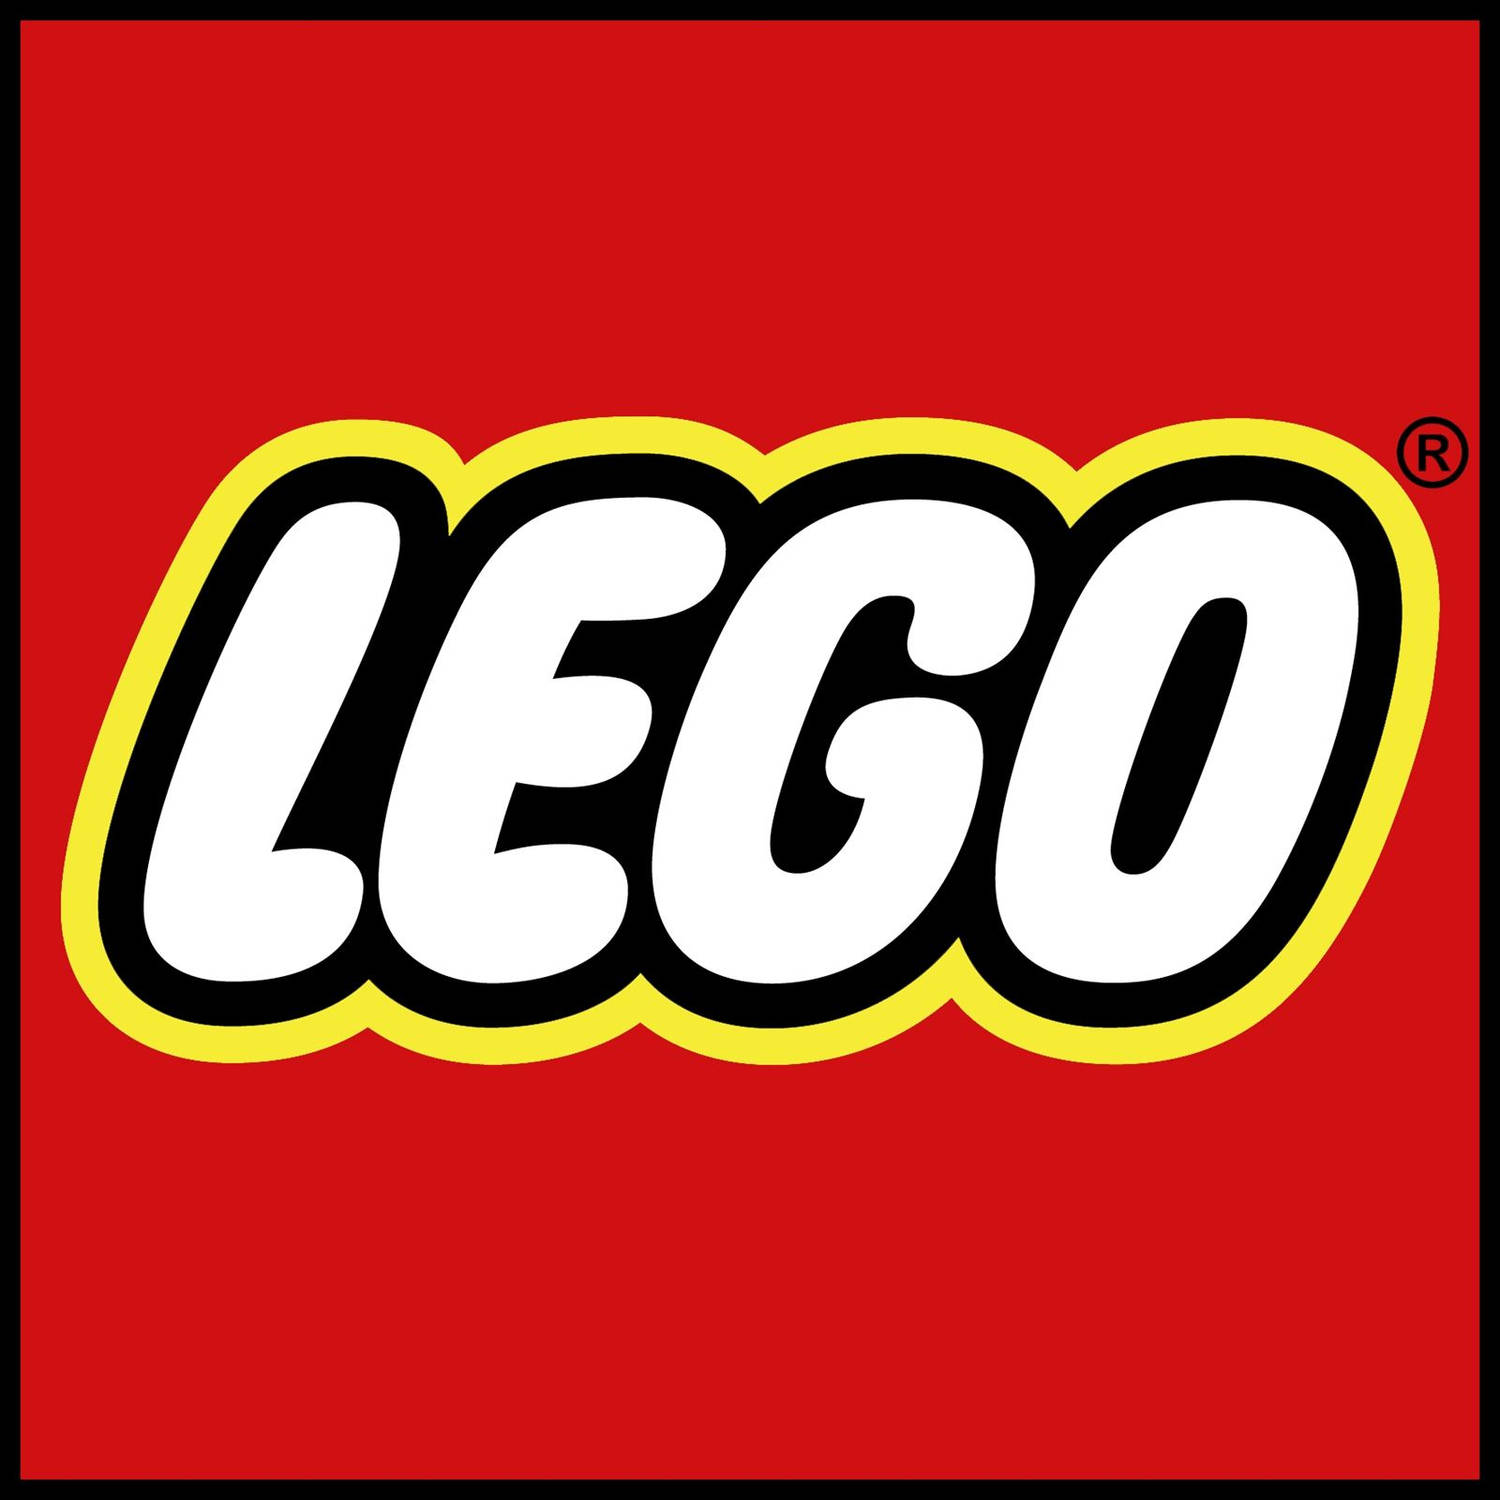 LEGO® CREATOR 31124 Super-Mech